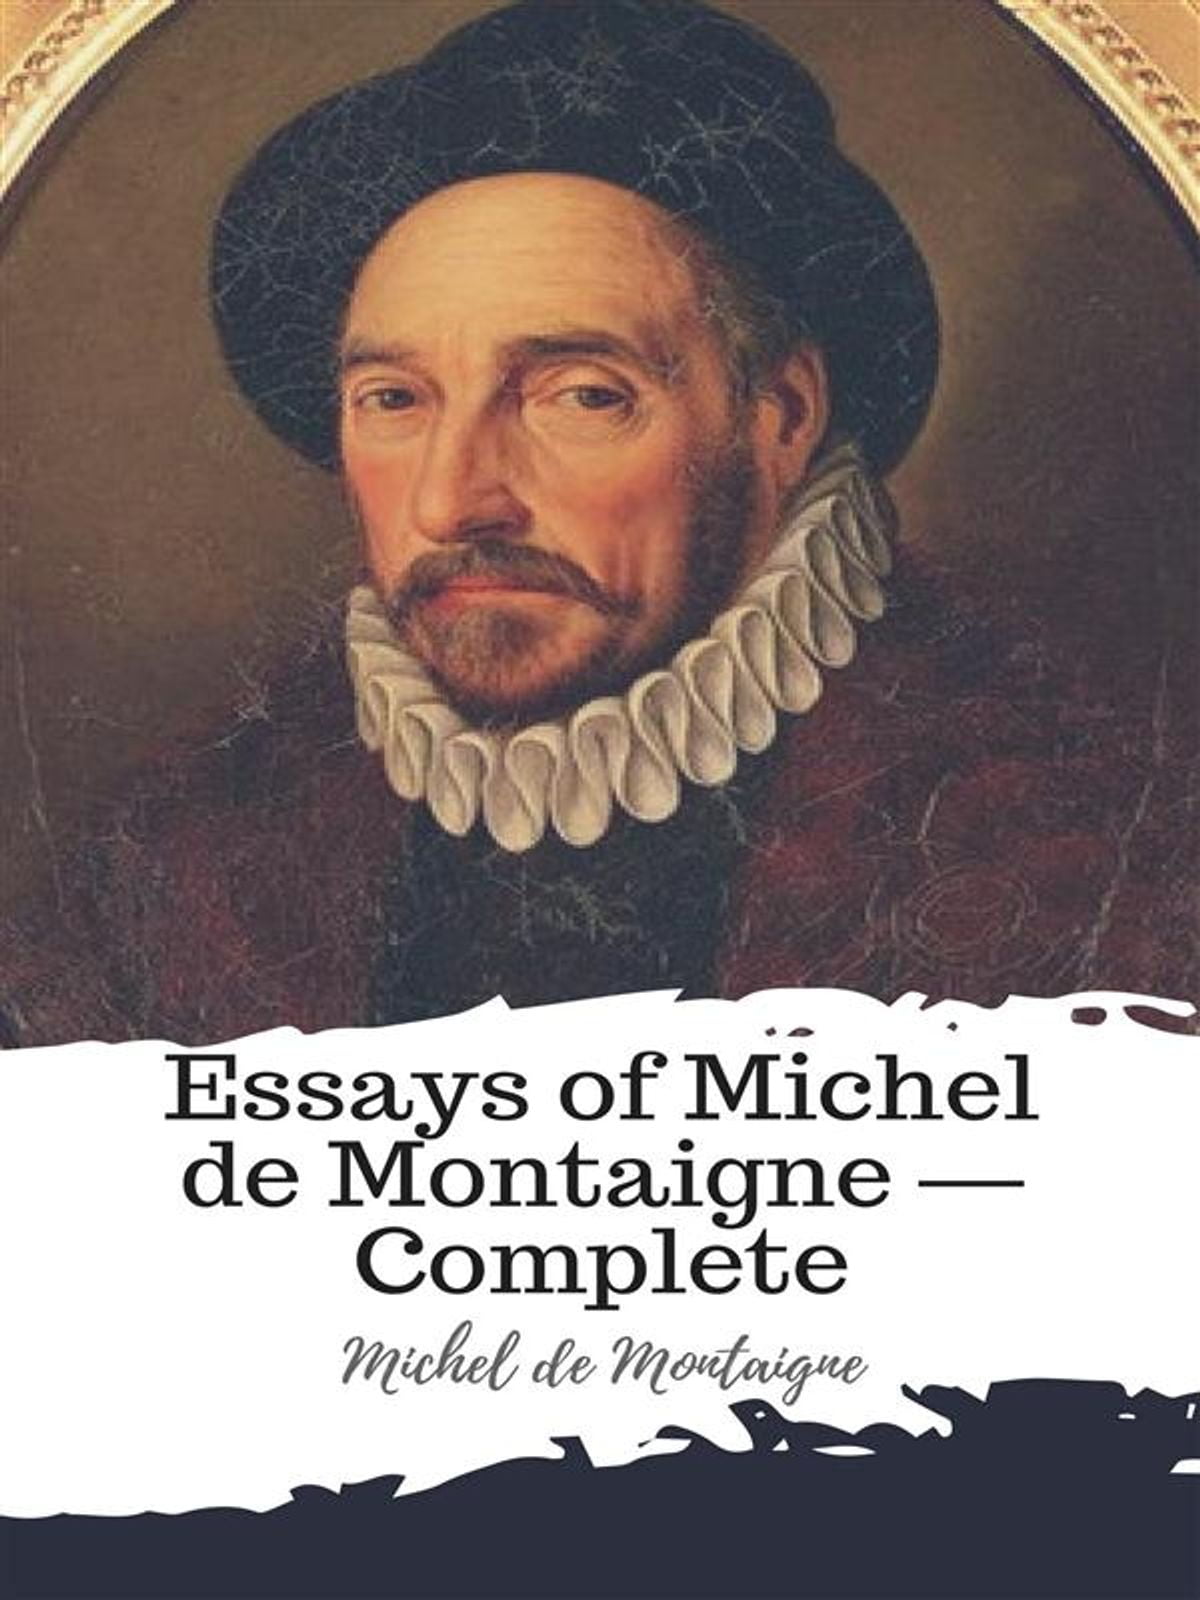 essays of michel de montaigne